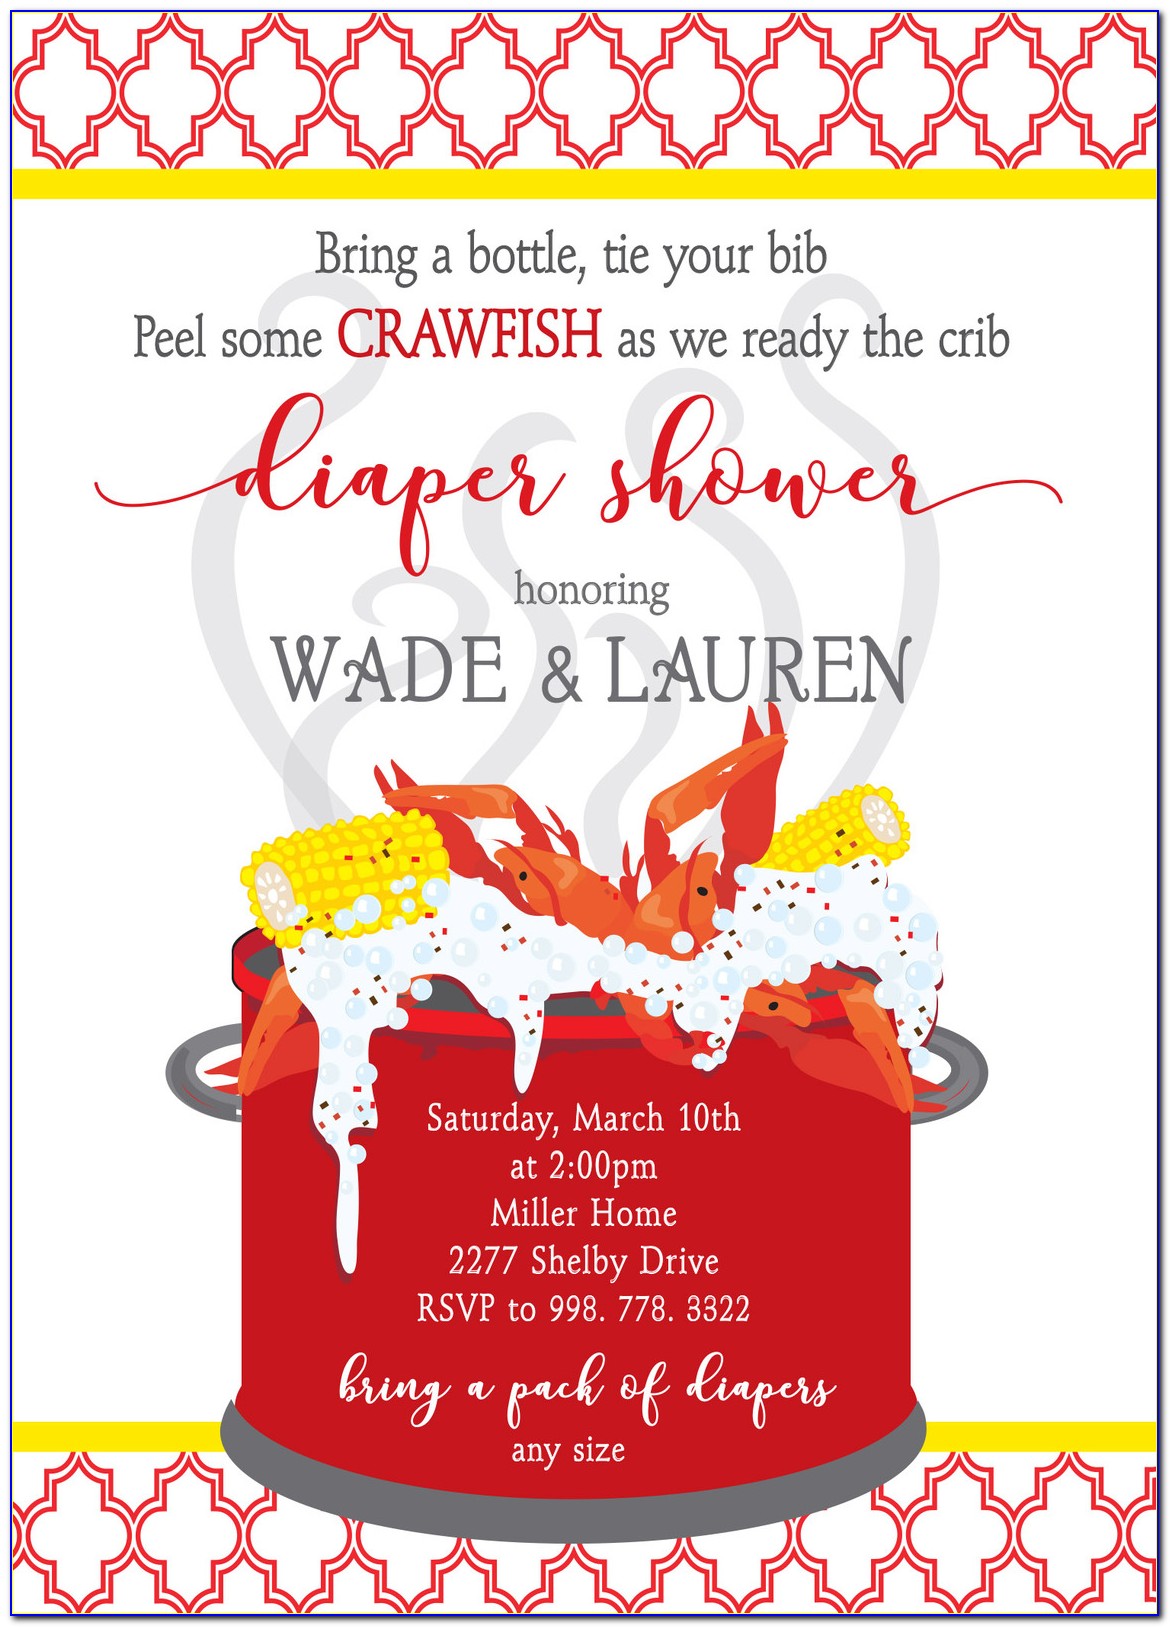 Crawfish Boil Wedding Invitations